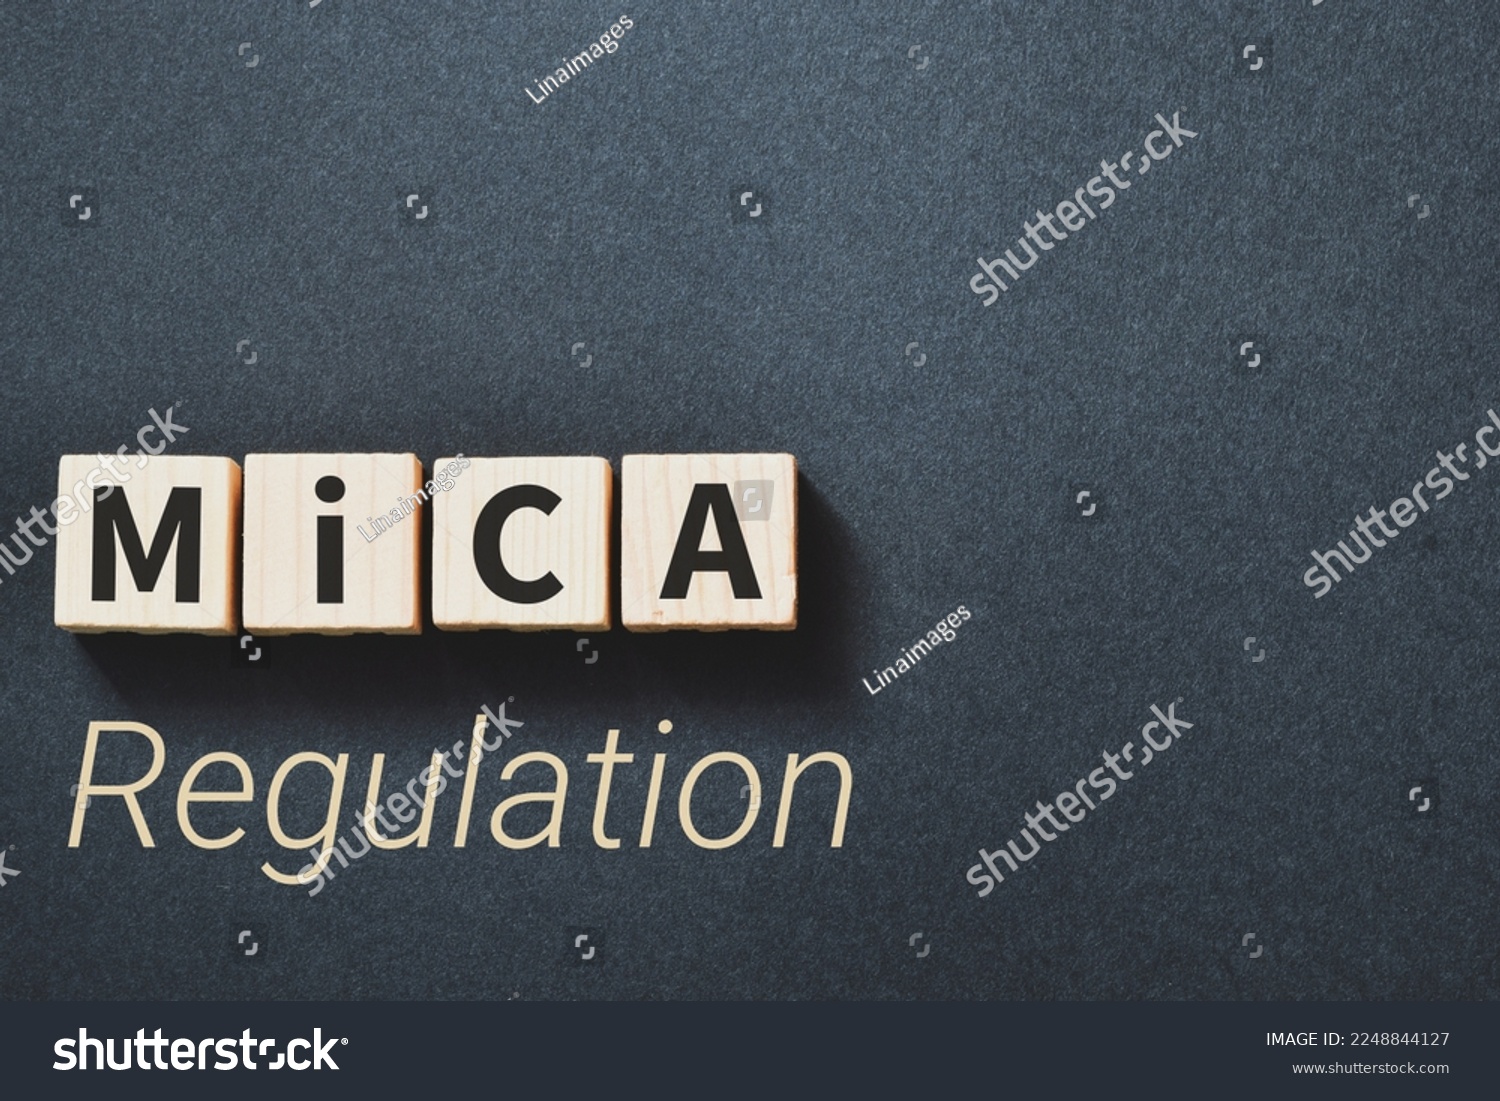 Markets in Crypto-Assets (MiCA) Regulation inscription on wooden blocks on dark background. #2248844127